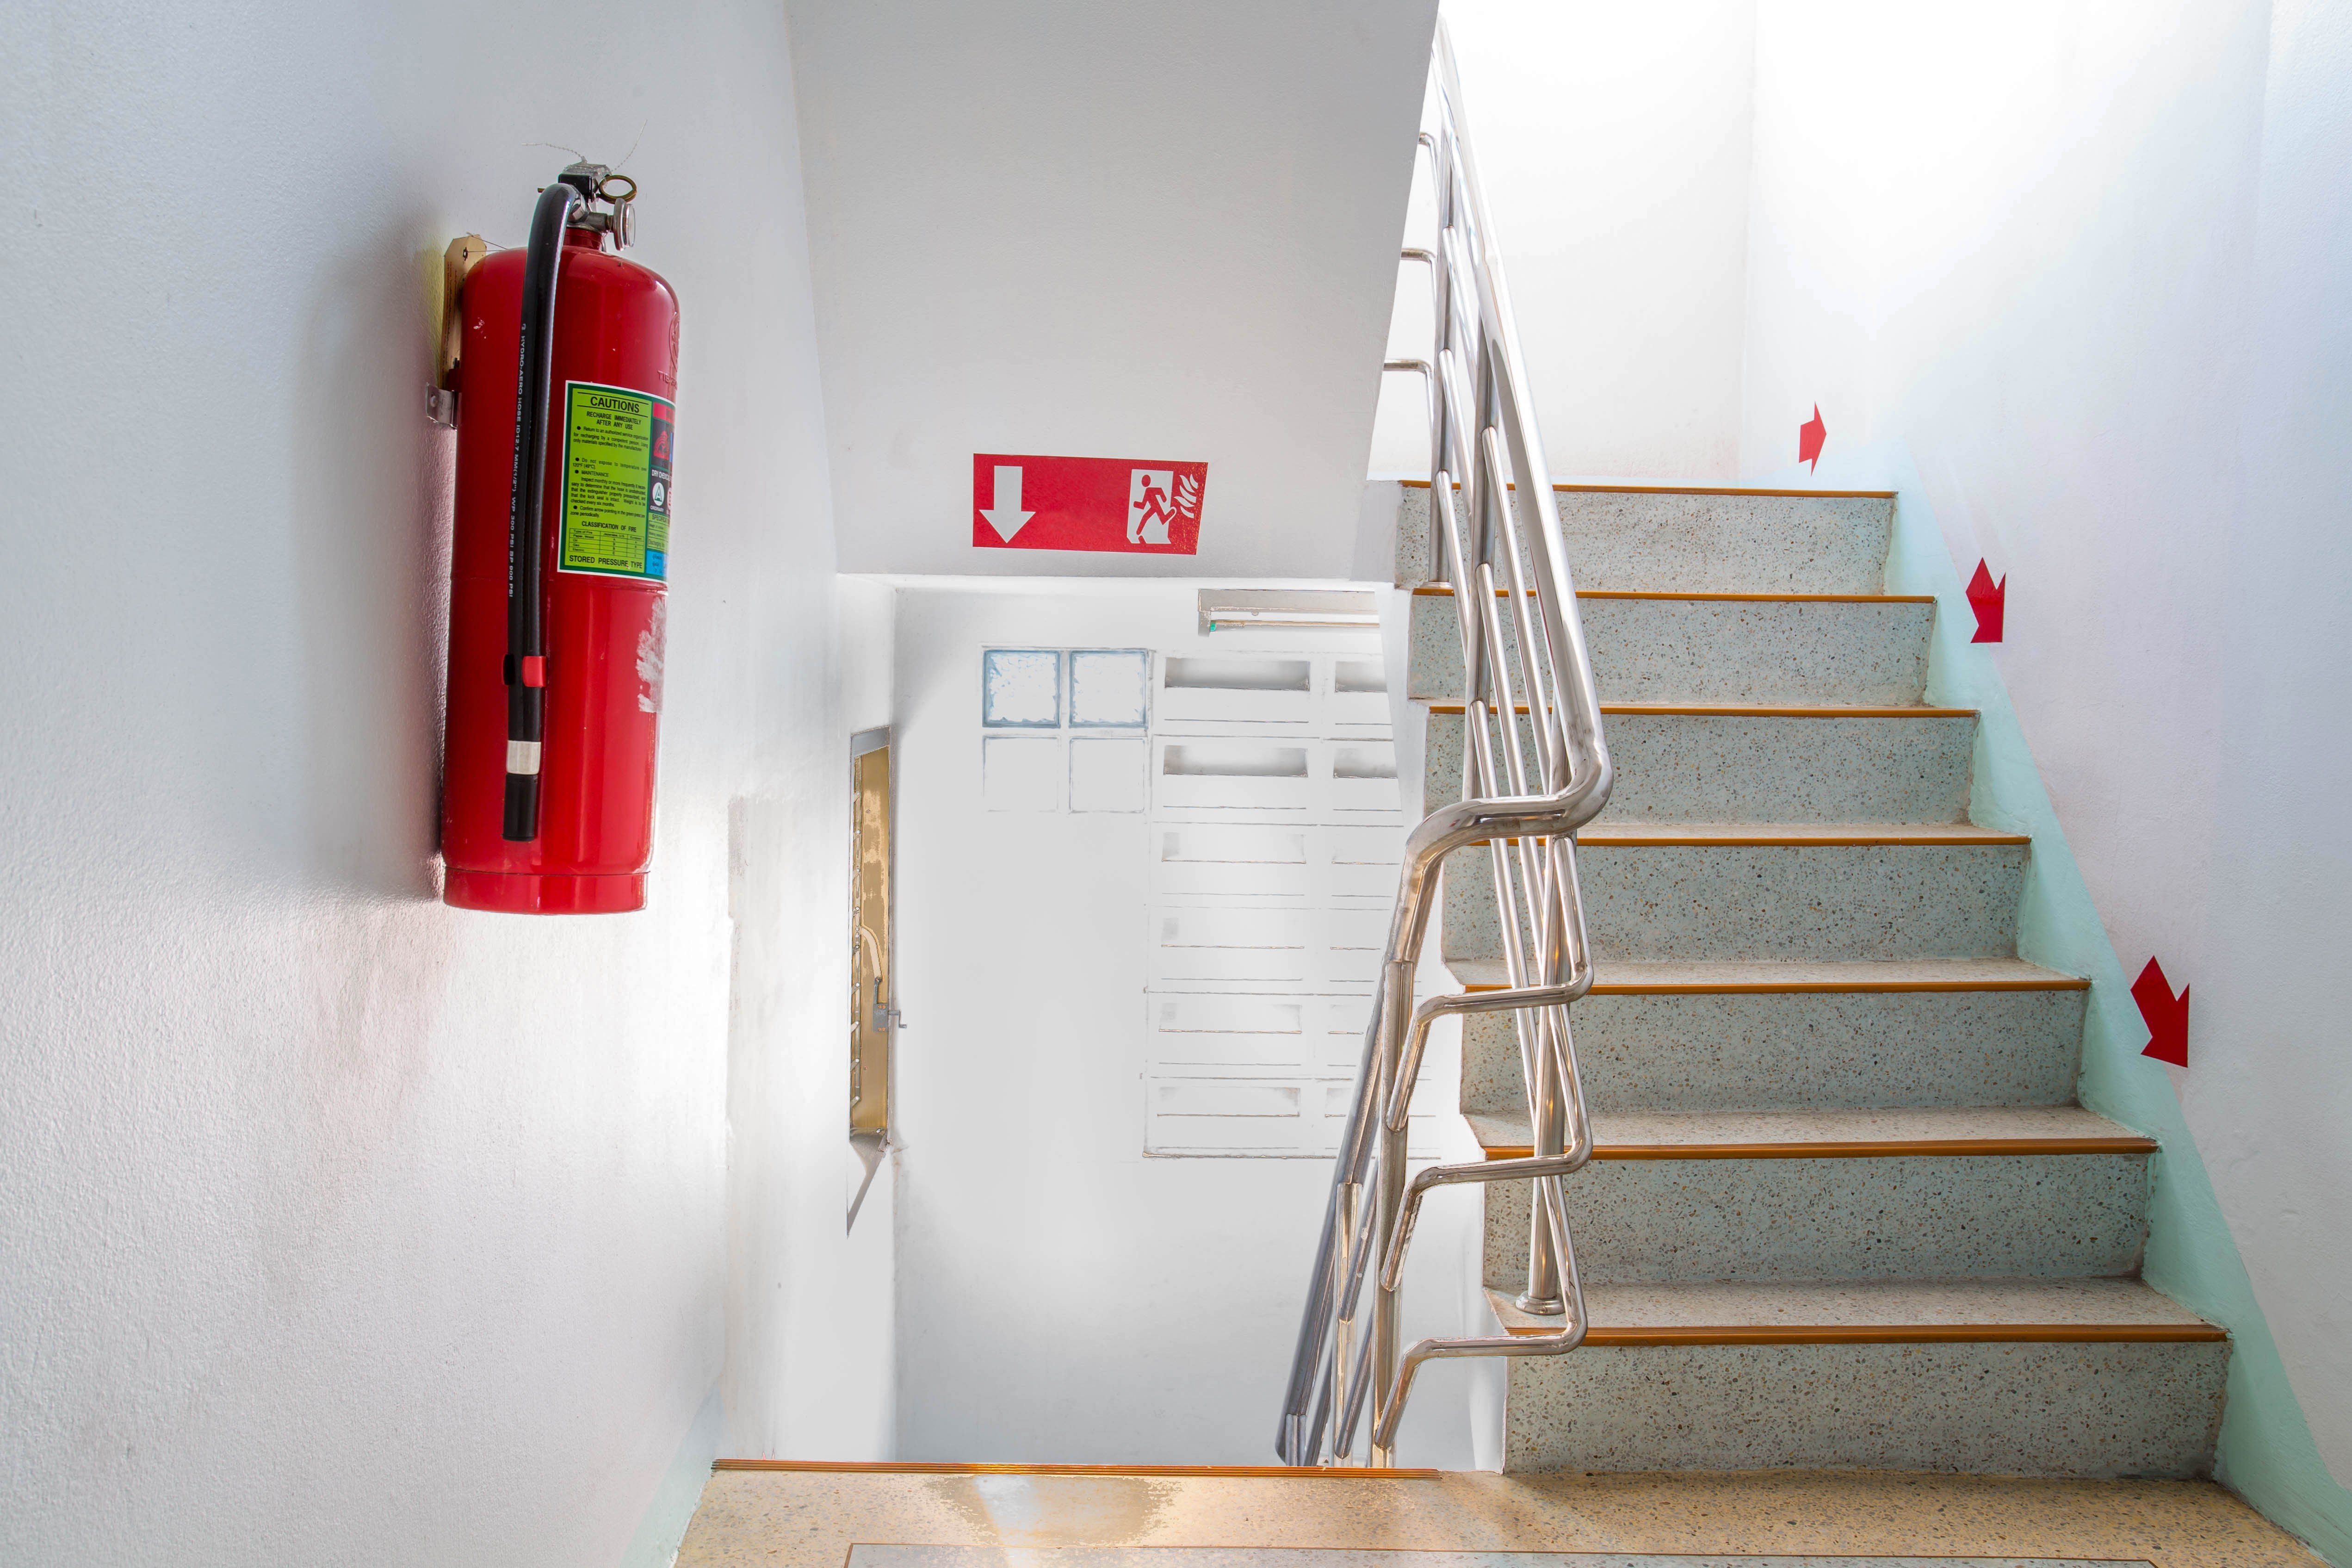 Escalera de incendios | Fuente: Shutterstock.com